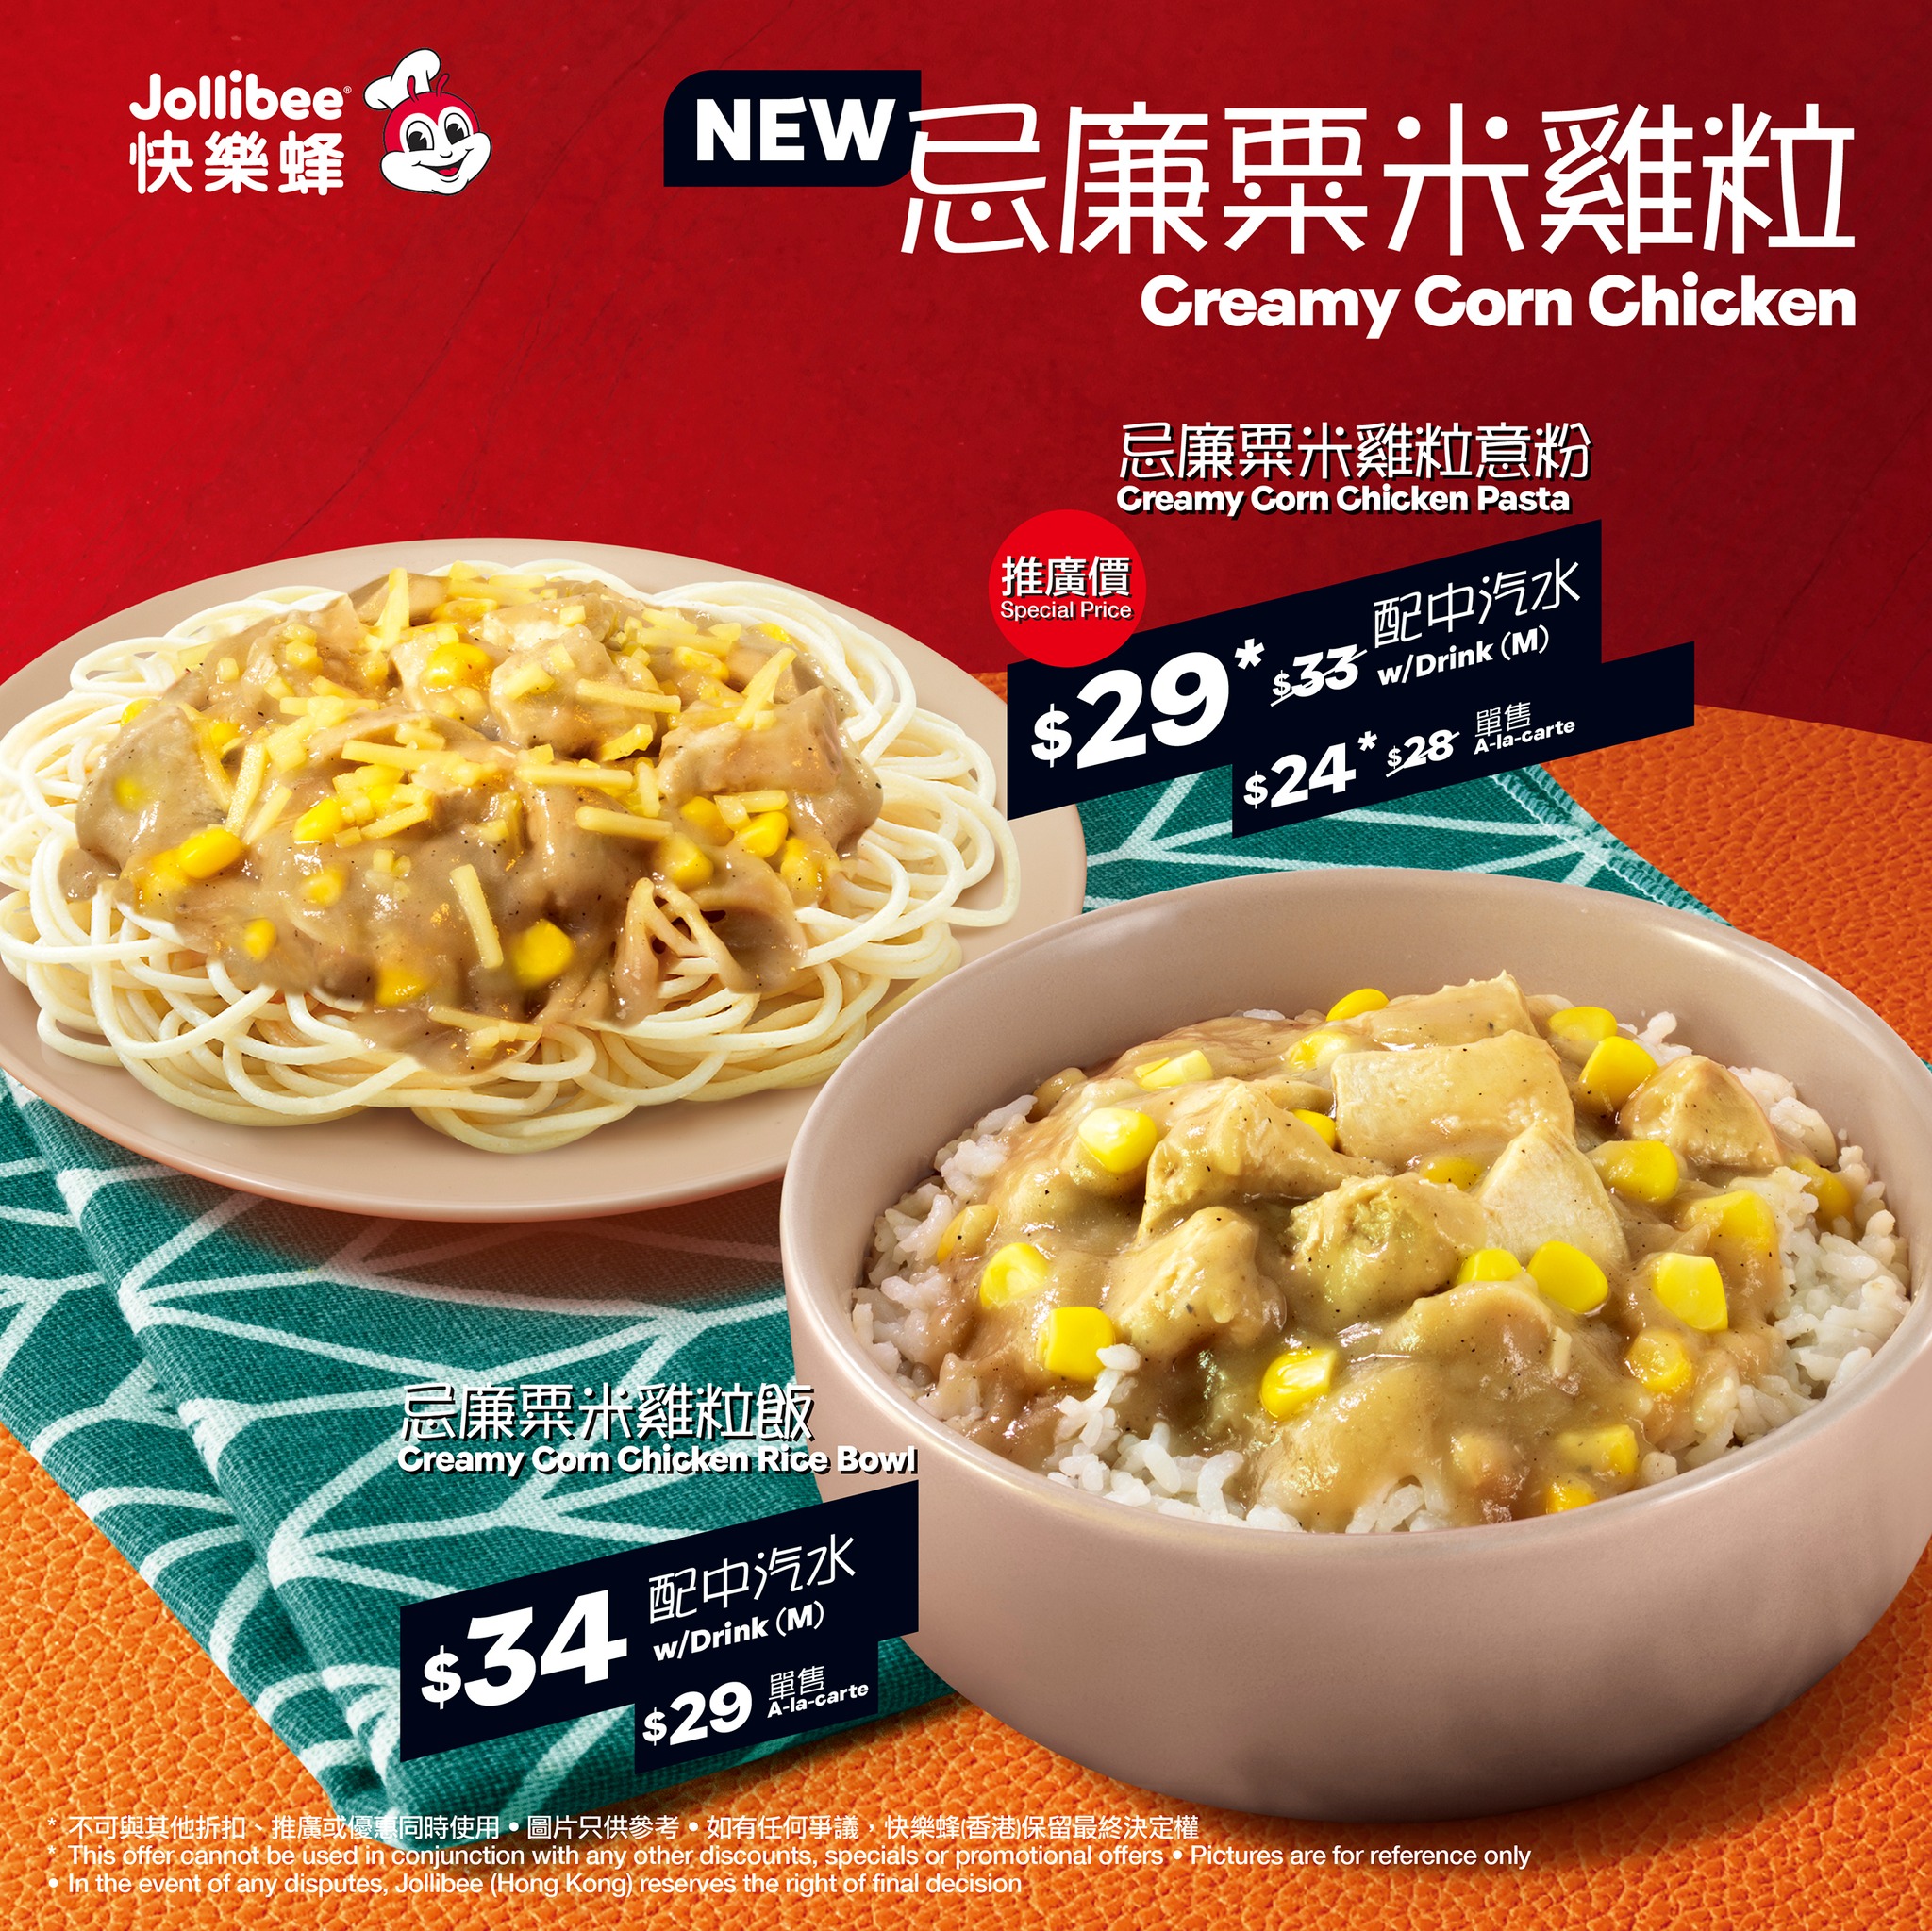 Jollibe creamy corn chicken series deal